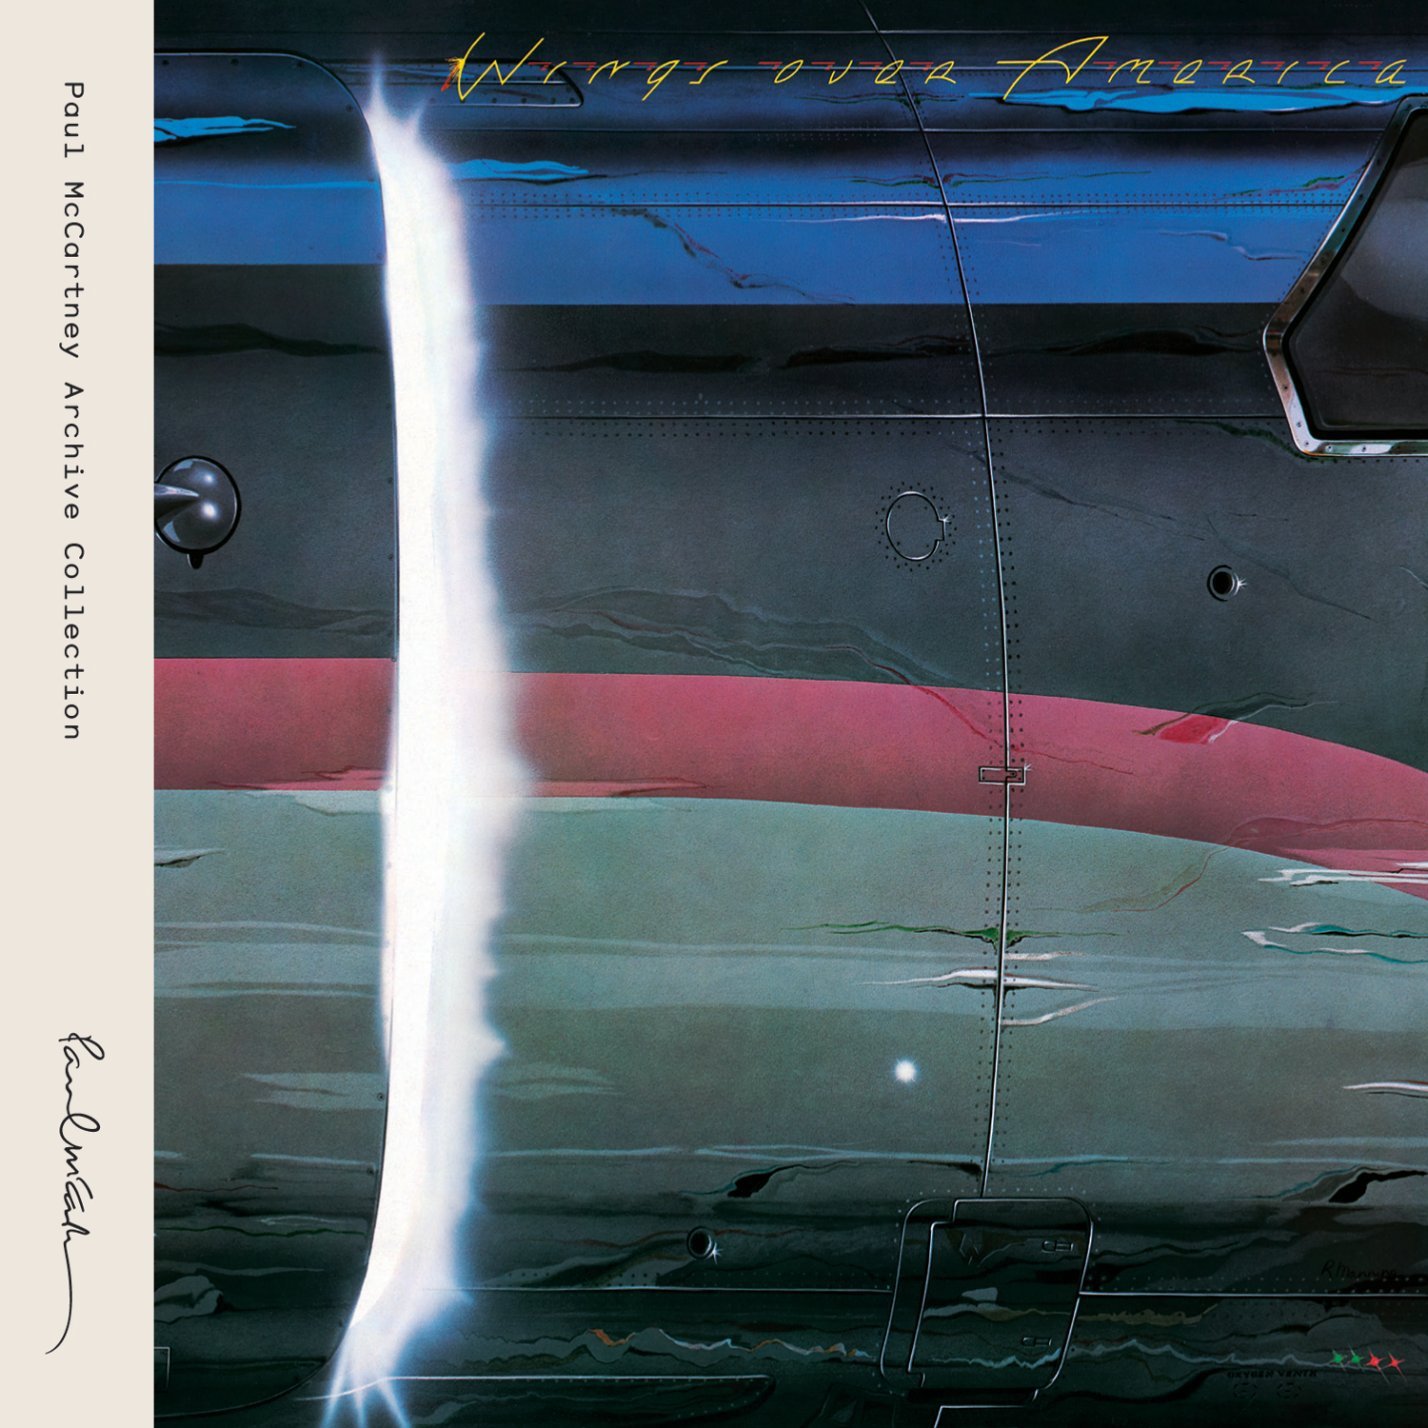 Paul Mccartney & Wings - Wings Over America (Remastered) (2013/2019) [FLAC 24bit/44,1kHz]